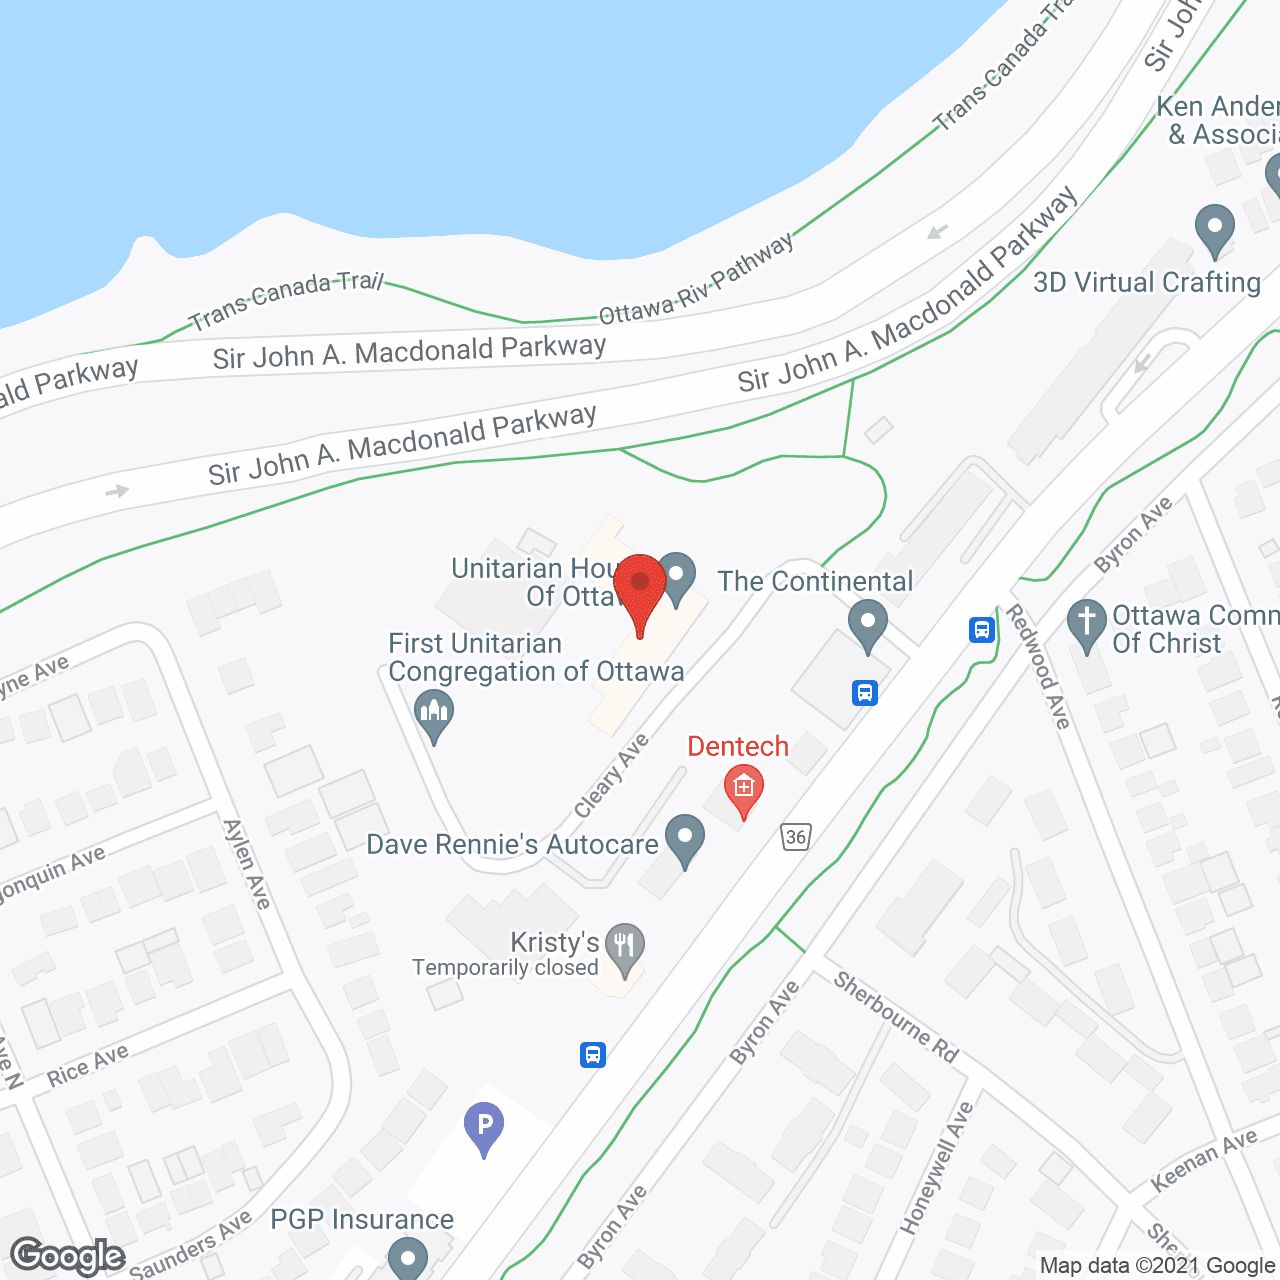 Unitarian House of Ottawa in google map